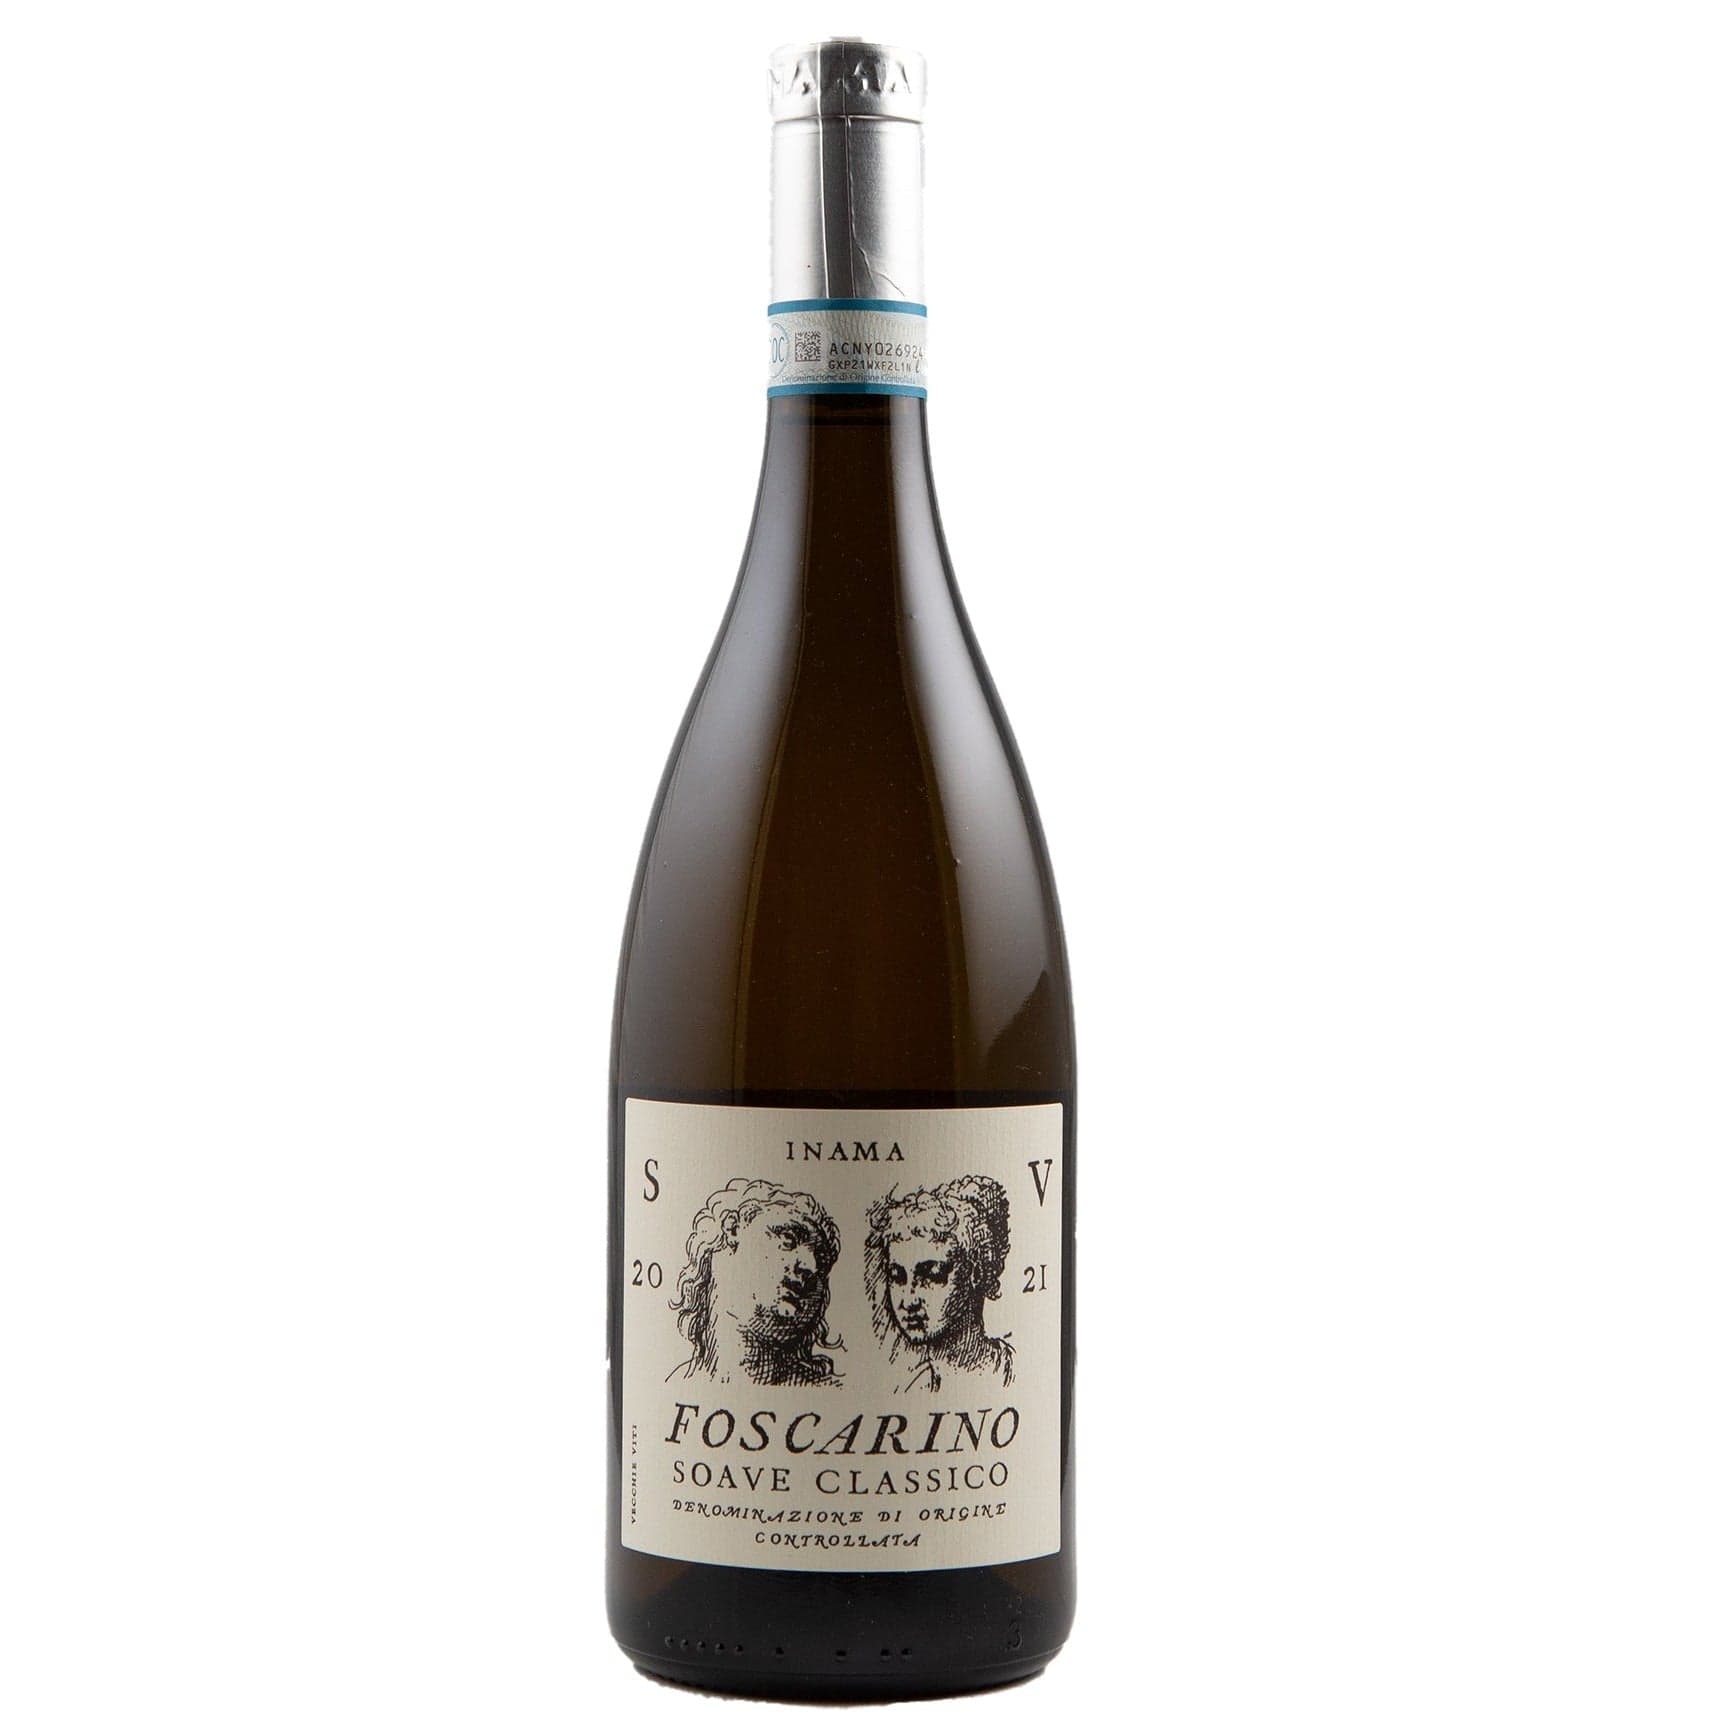 Single bottle of White wine Inama, Soave Classico Vigneti di Foscarino, 2021 100% Garganega